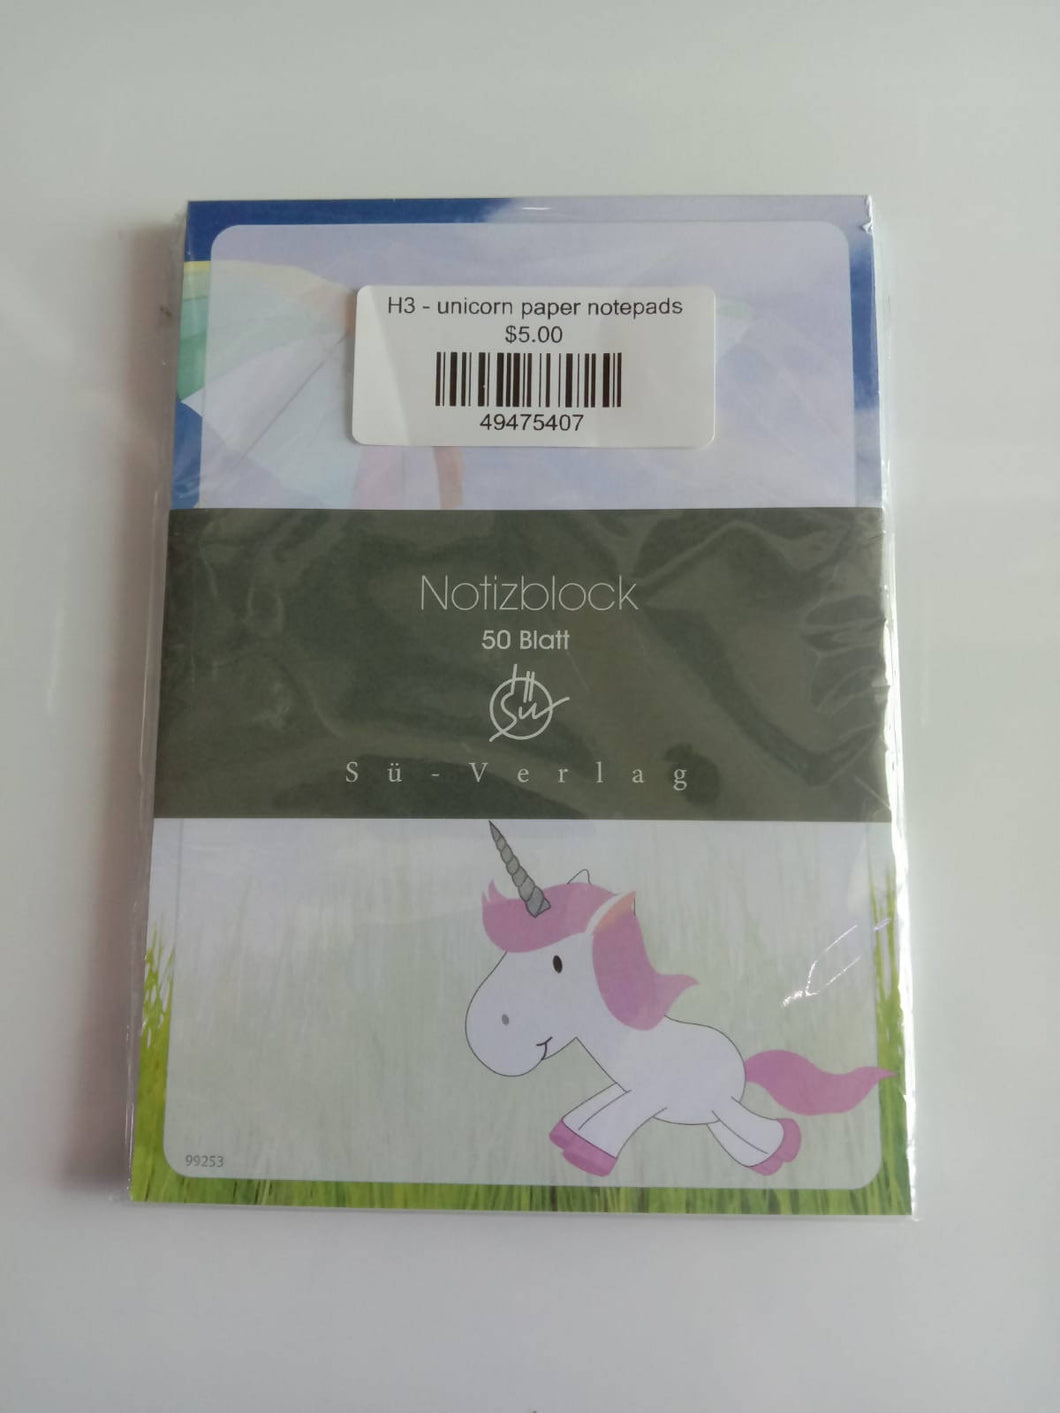 H3 - unicorn paper notepads